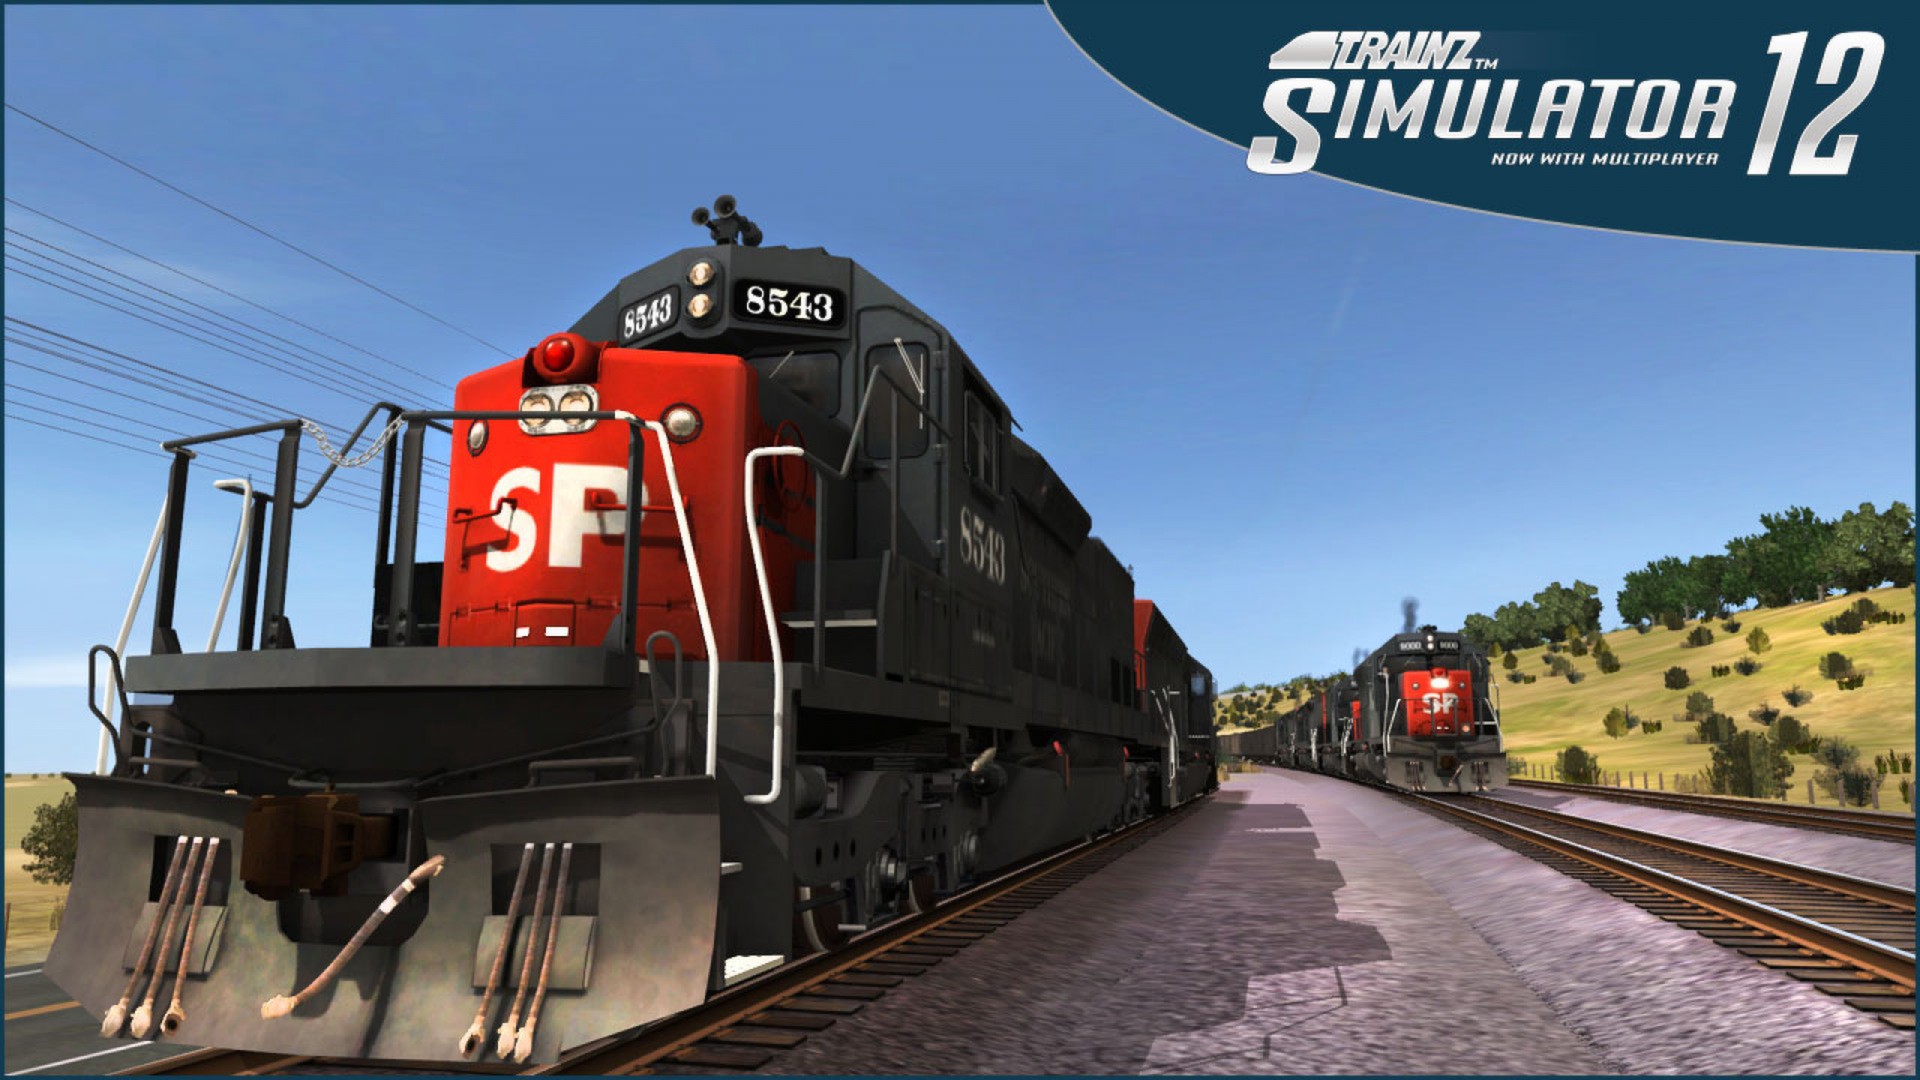 Trainz Simulator 12 Demo Download